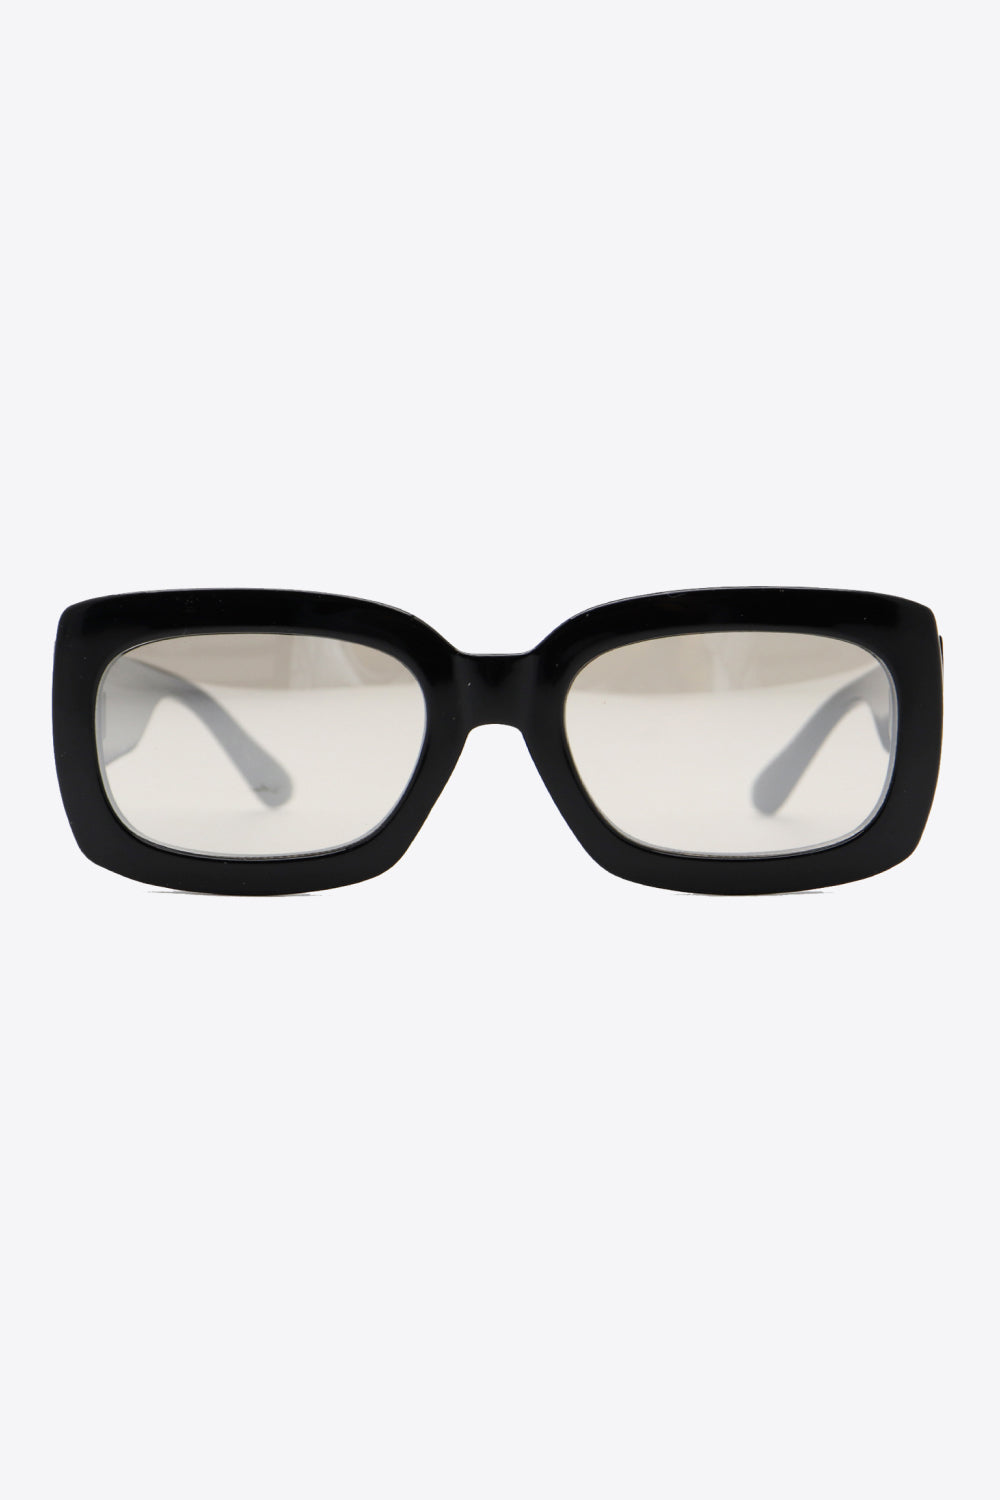 Polycarbonate Frame Rectangle Sunglasses - BEAUTY COSMOTICS SHOP